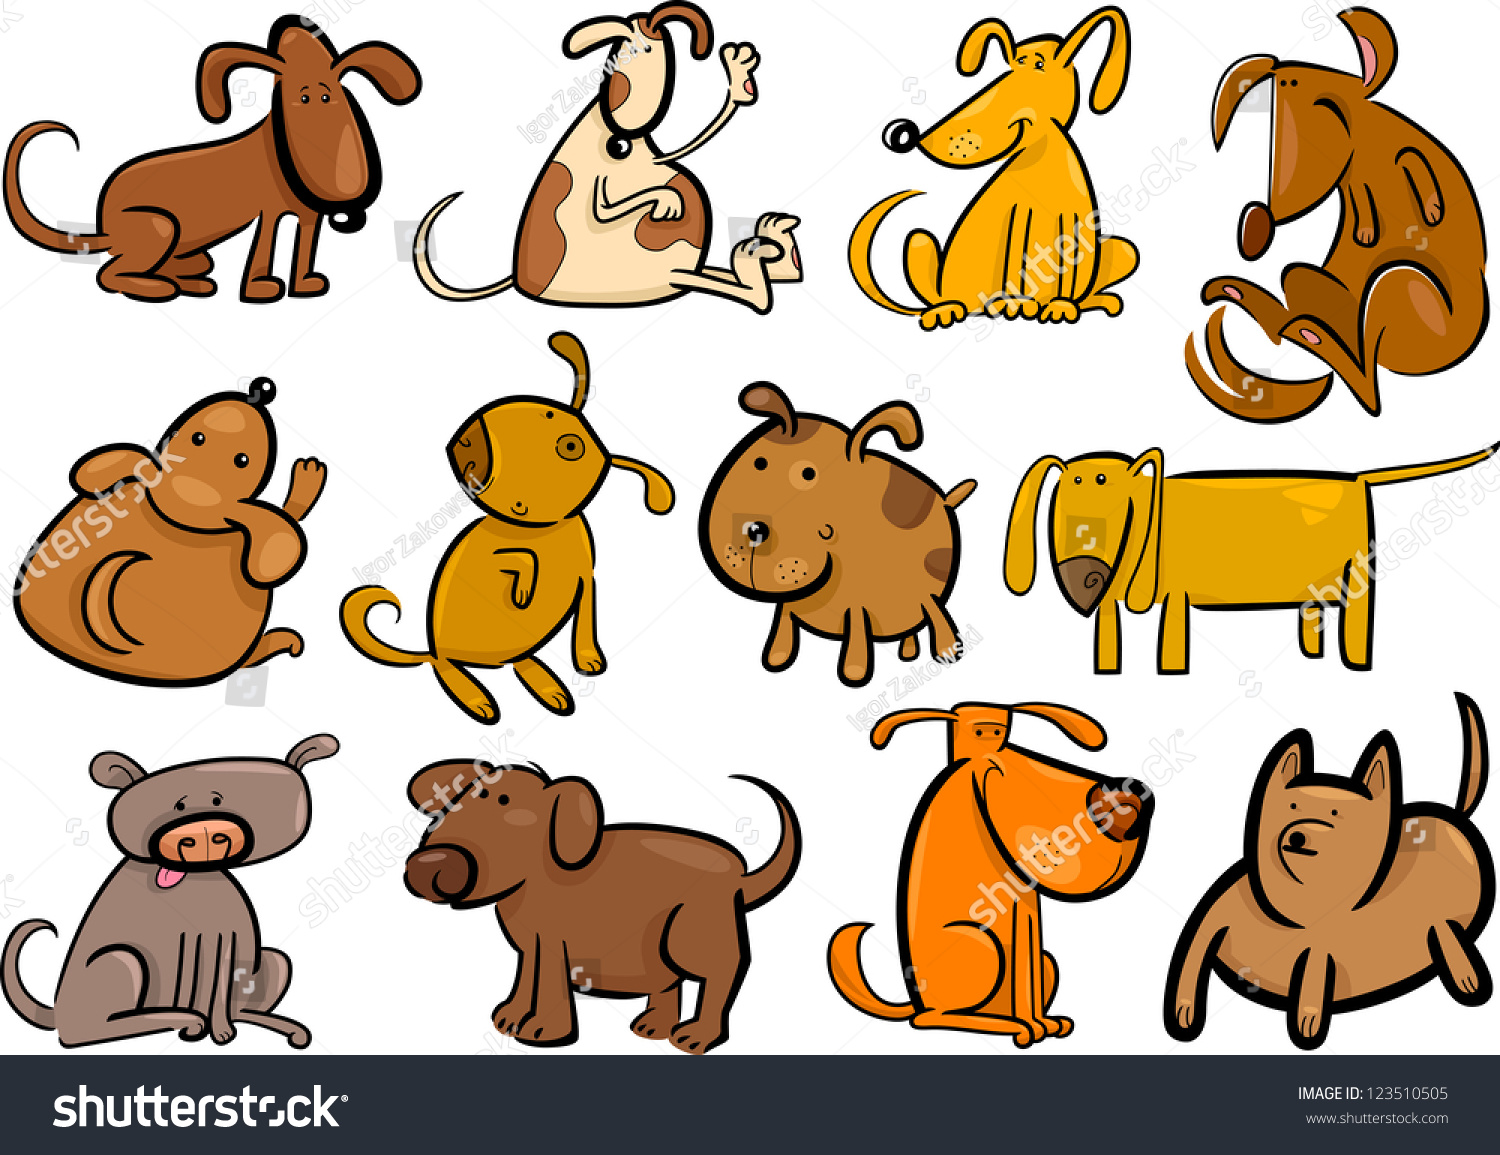 Edit Vectors Free Online - Cartoon Illu | Shutterstock Editor